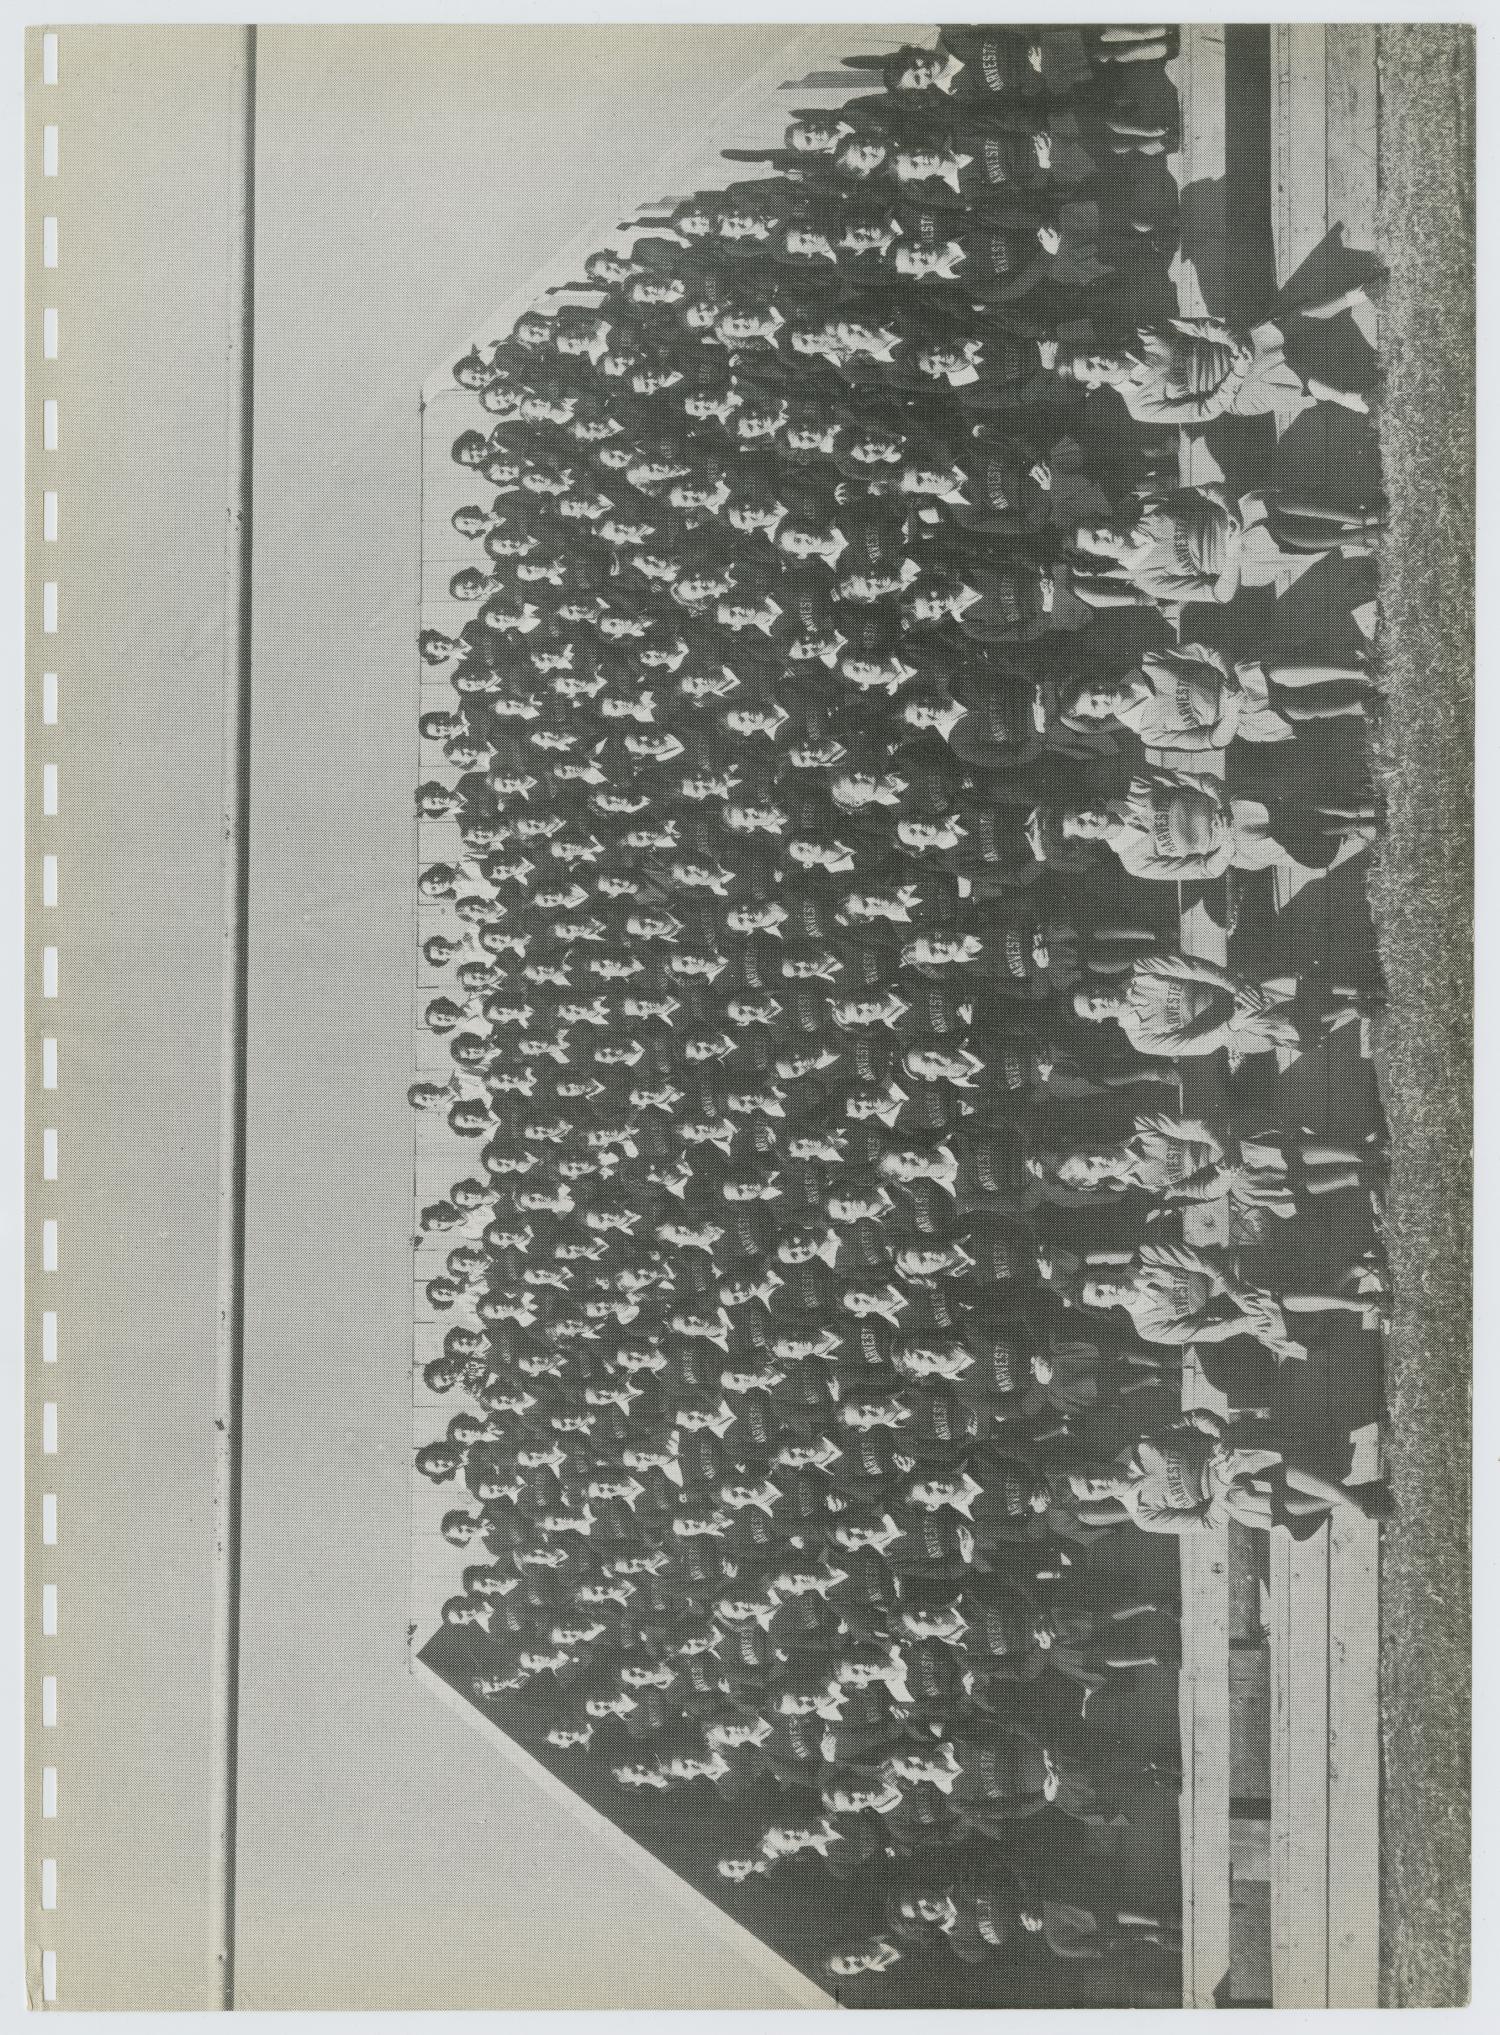 Harvester, Yearbook of Pampa High School, Volume 9, 1938
                                                
                                                    69
                                                